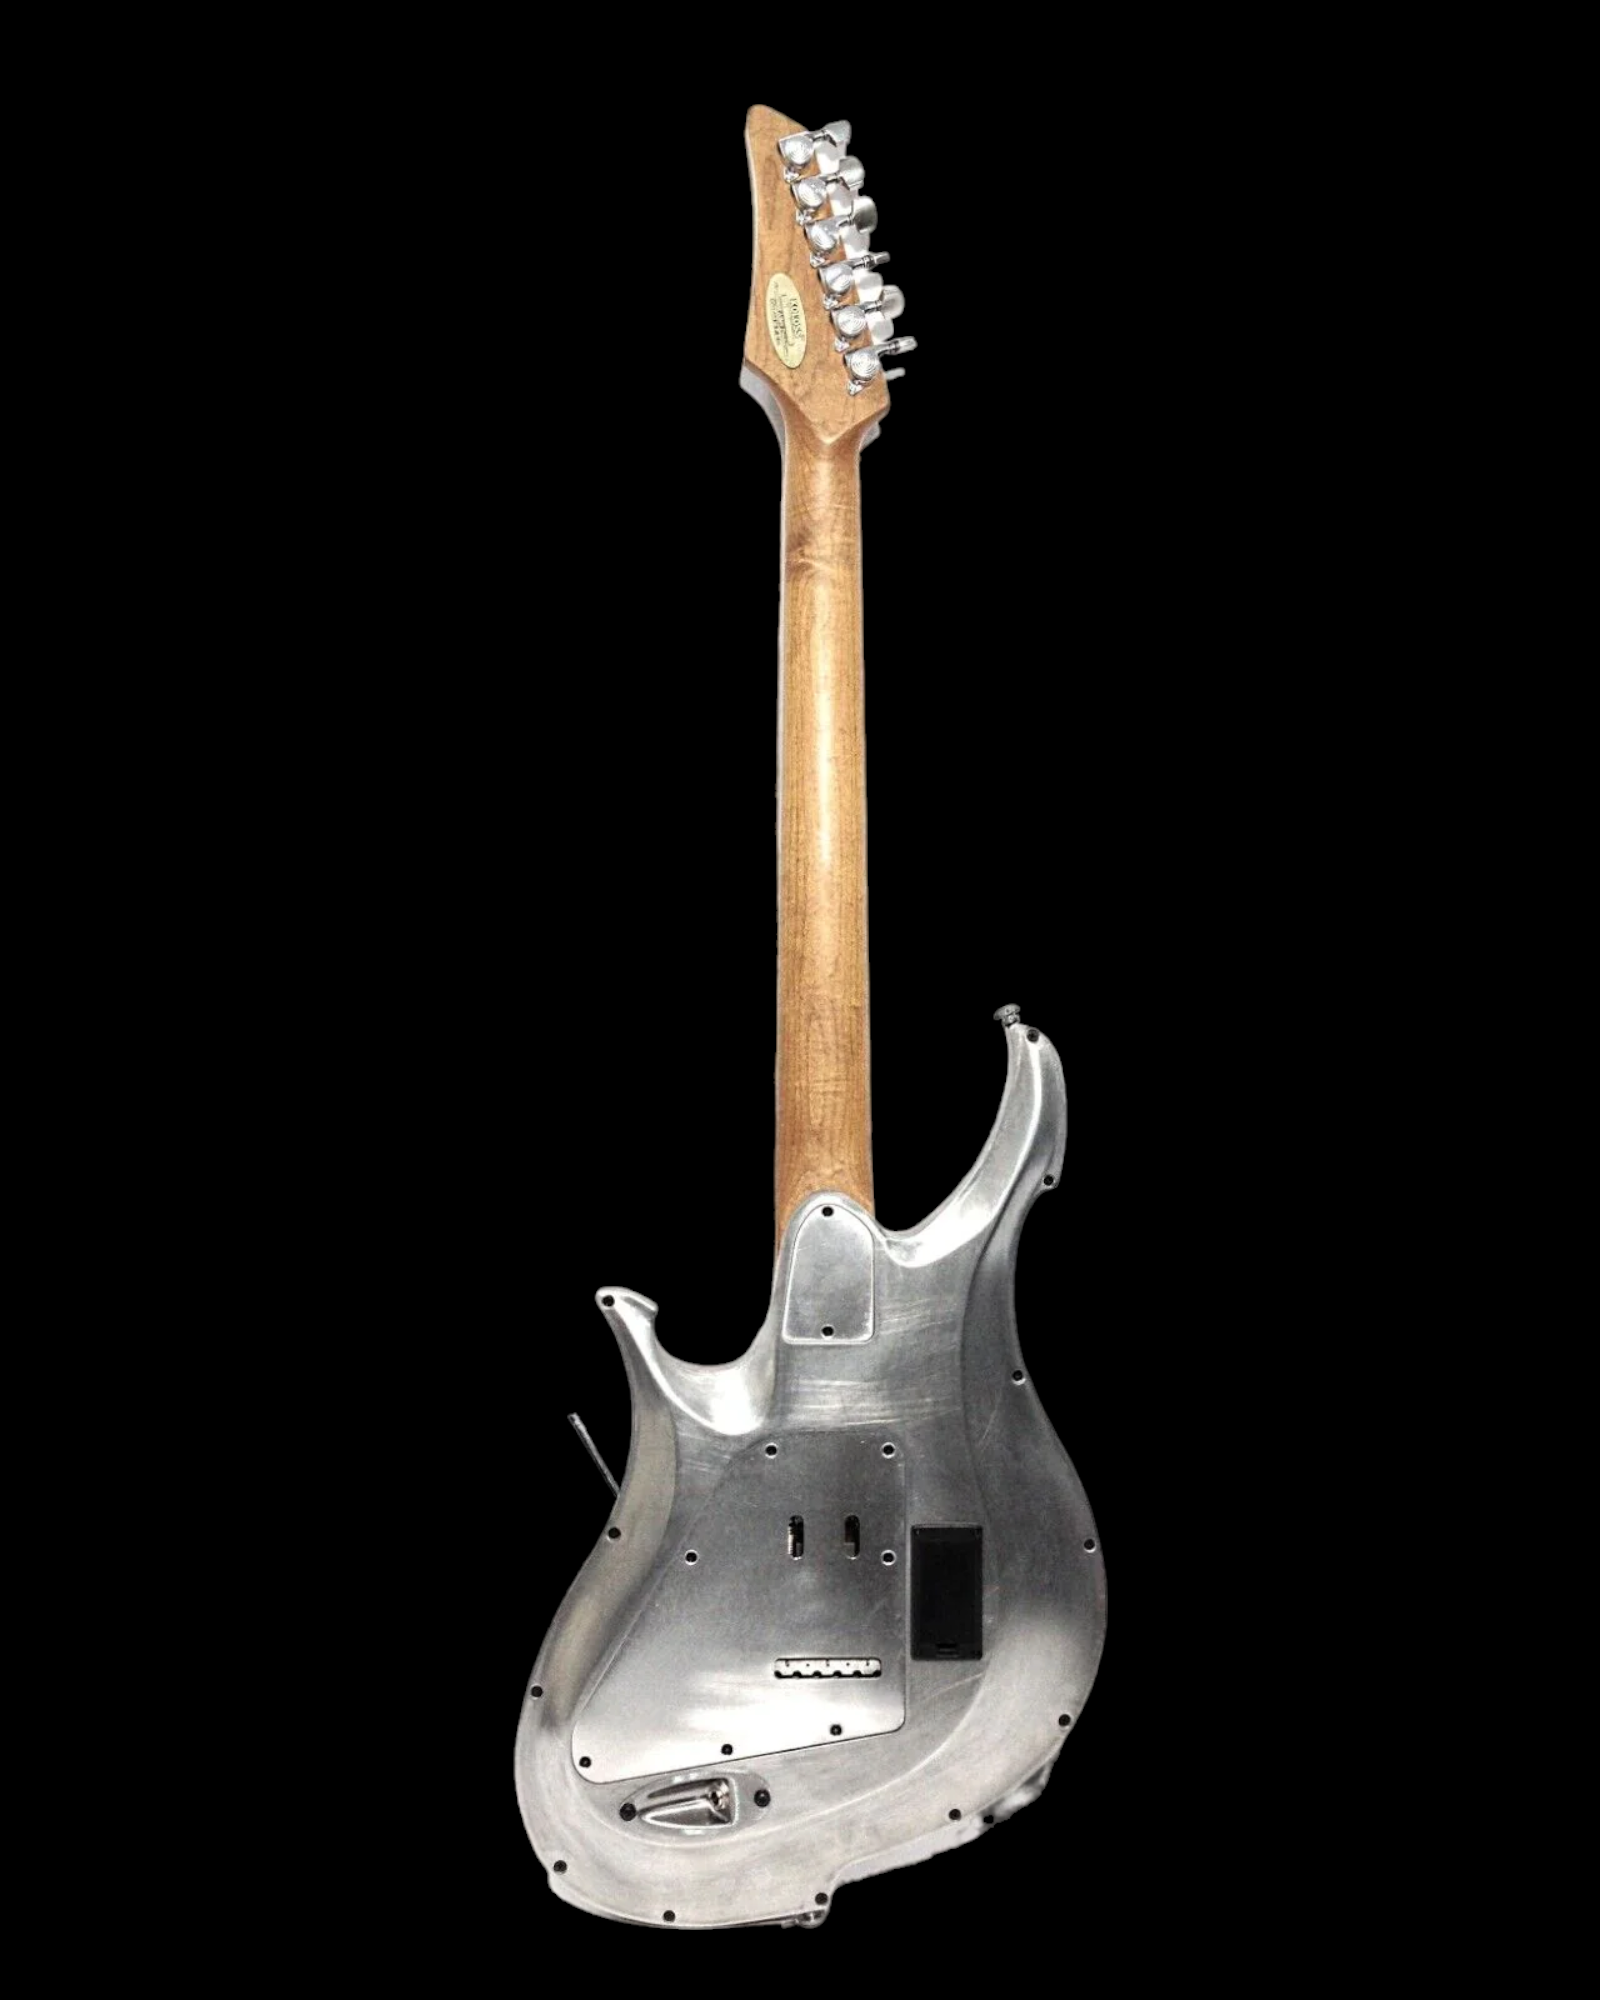 KOLOSS GT45P Aluminum Body Roasted Maple Neck Electric Guitar